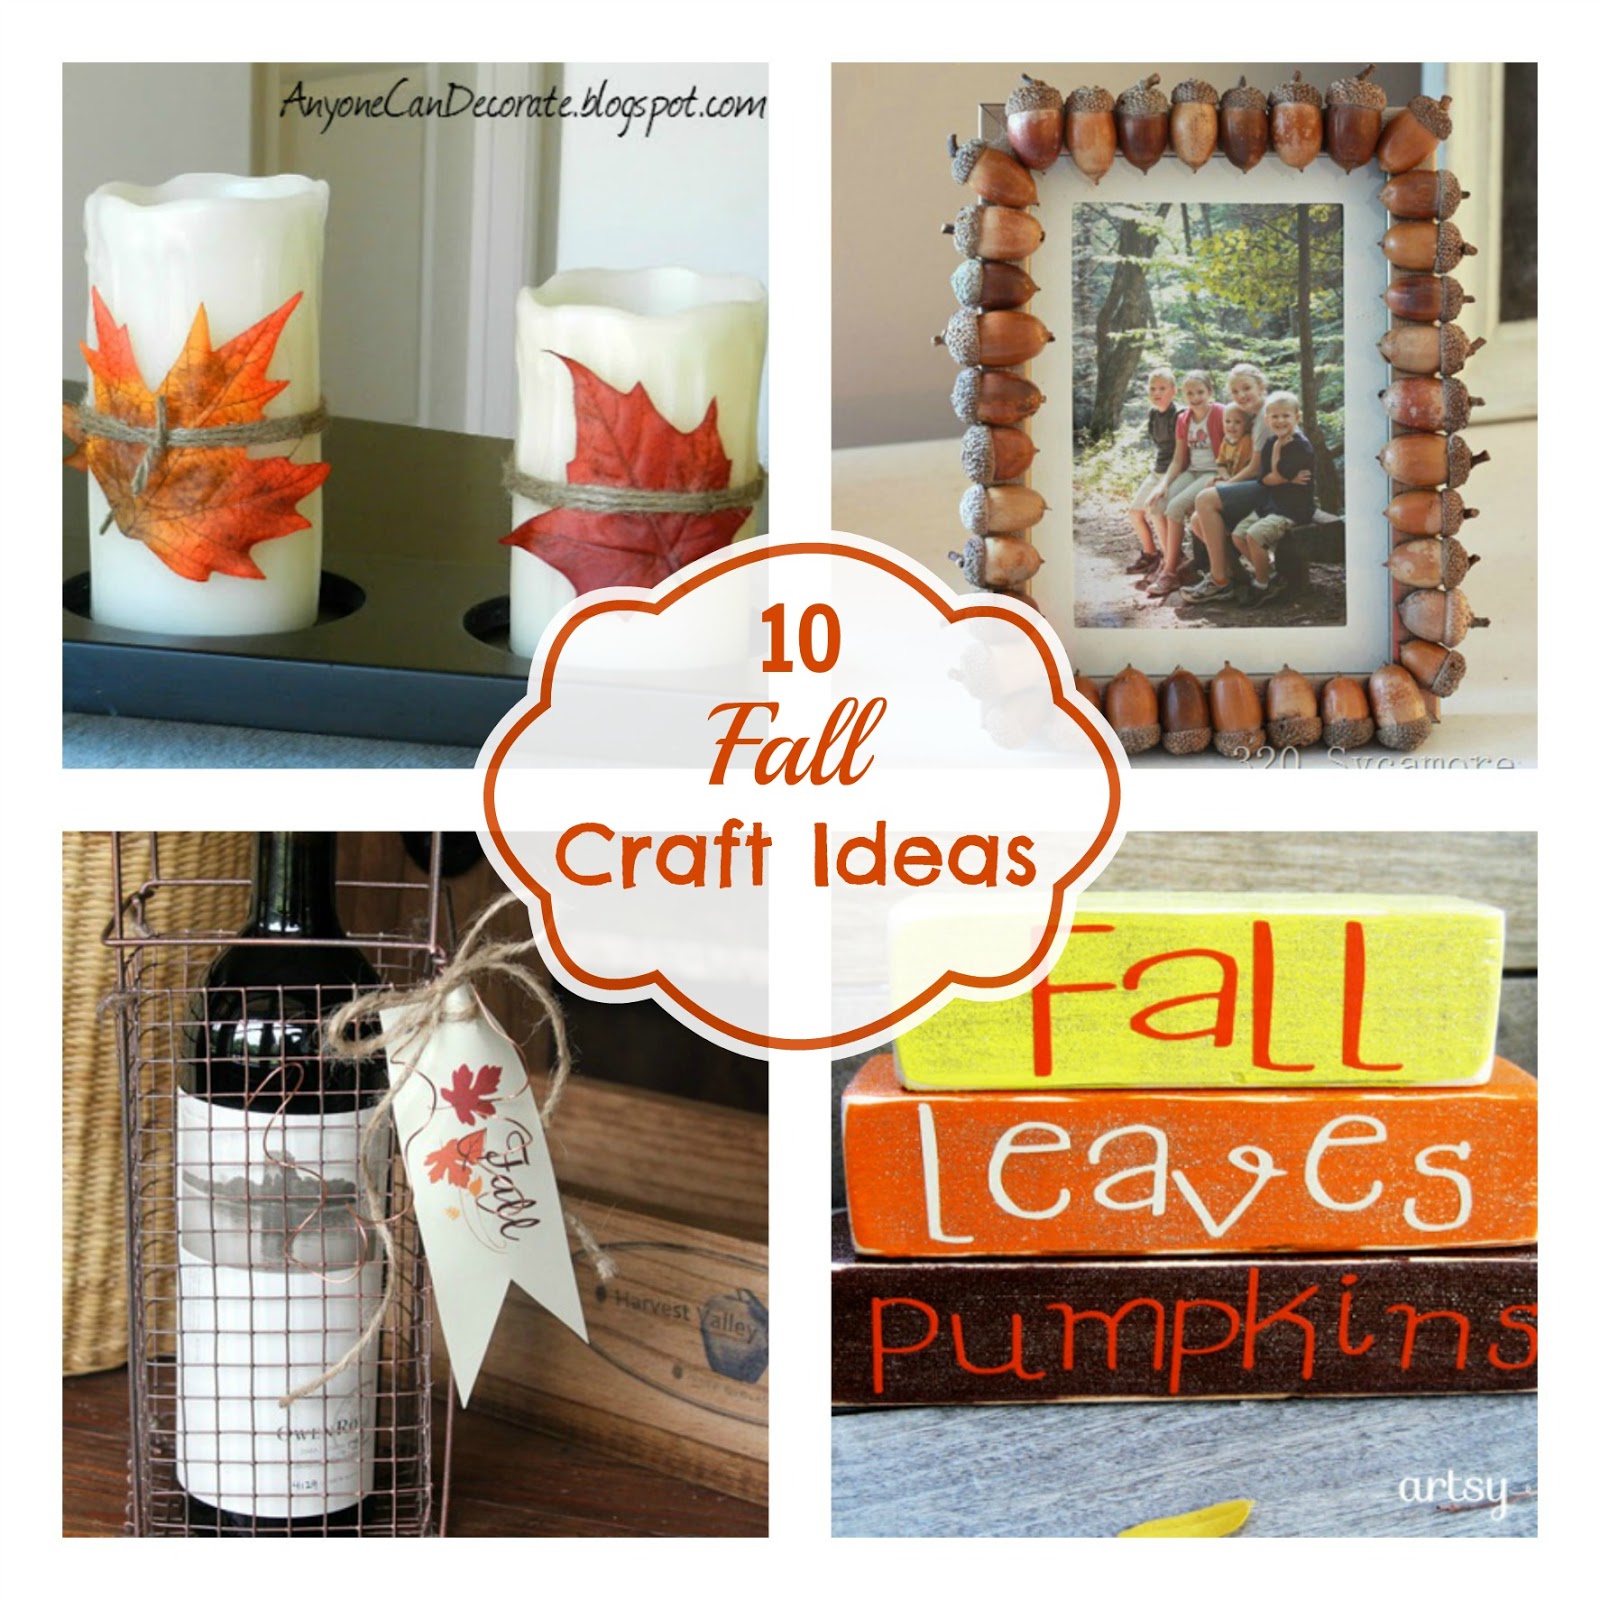 Fun Home Things: 10 Fall Craft Ideas